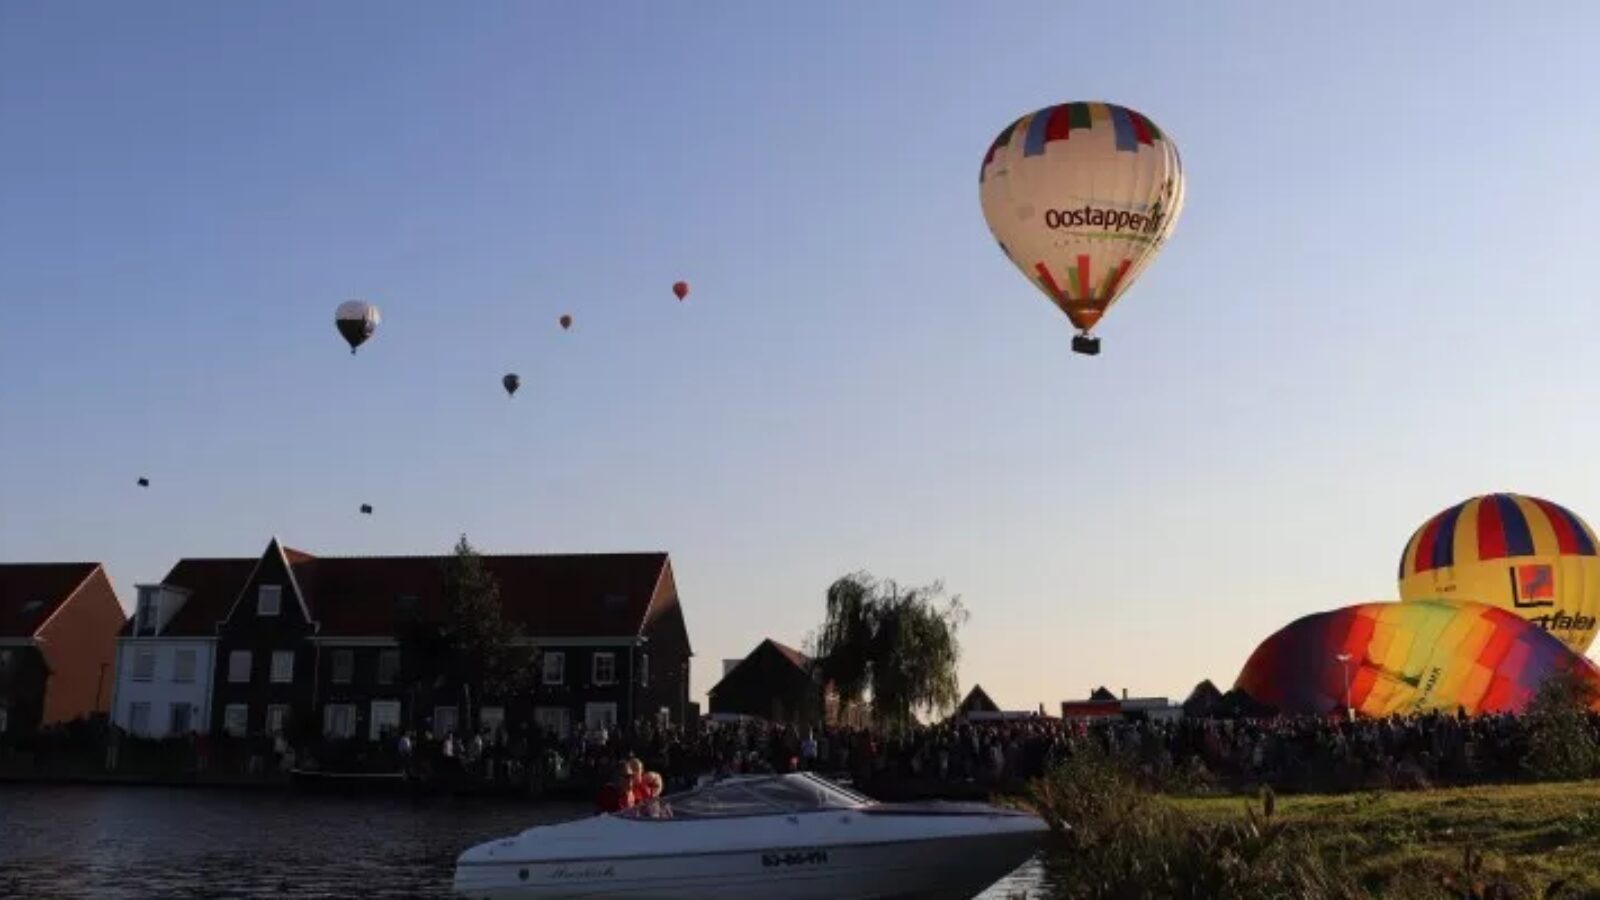 Topdrukte tijdens sfeervolle Ballon Fiësta Meerstad 2018